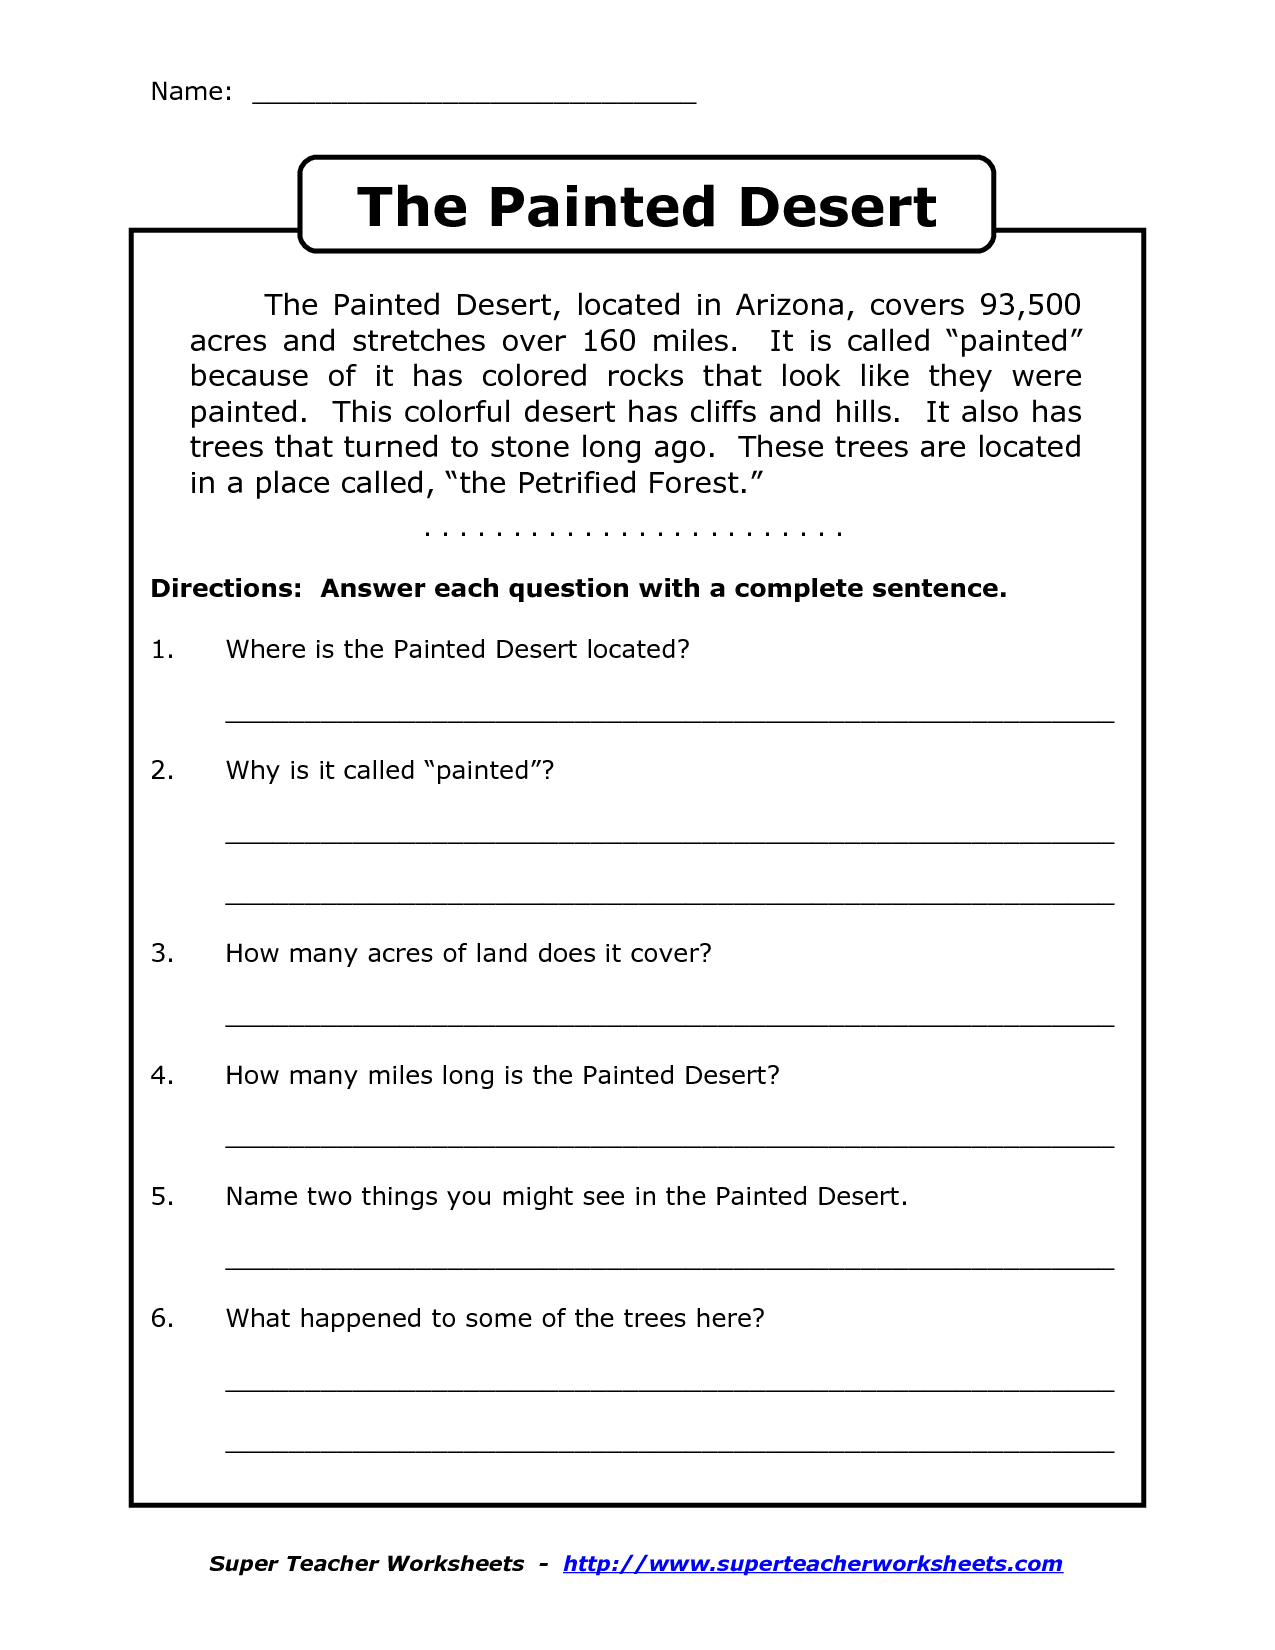 14 Images of 9th Grade Reading Comprehension Worksheets